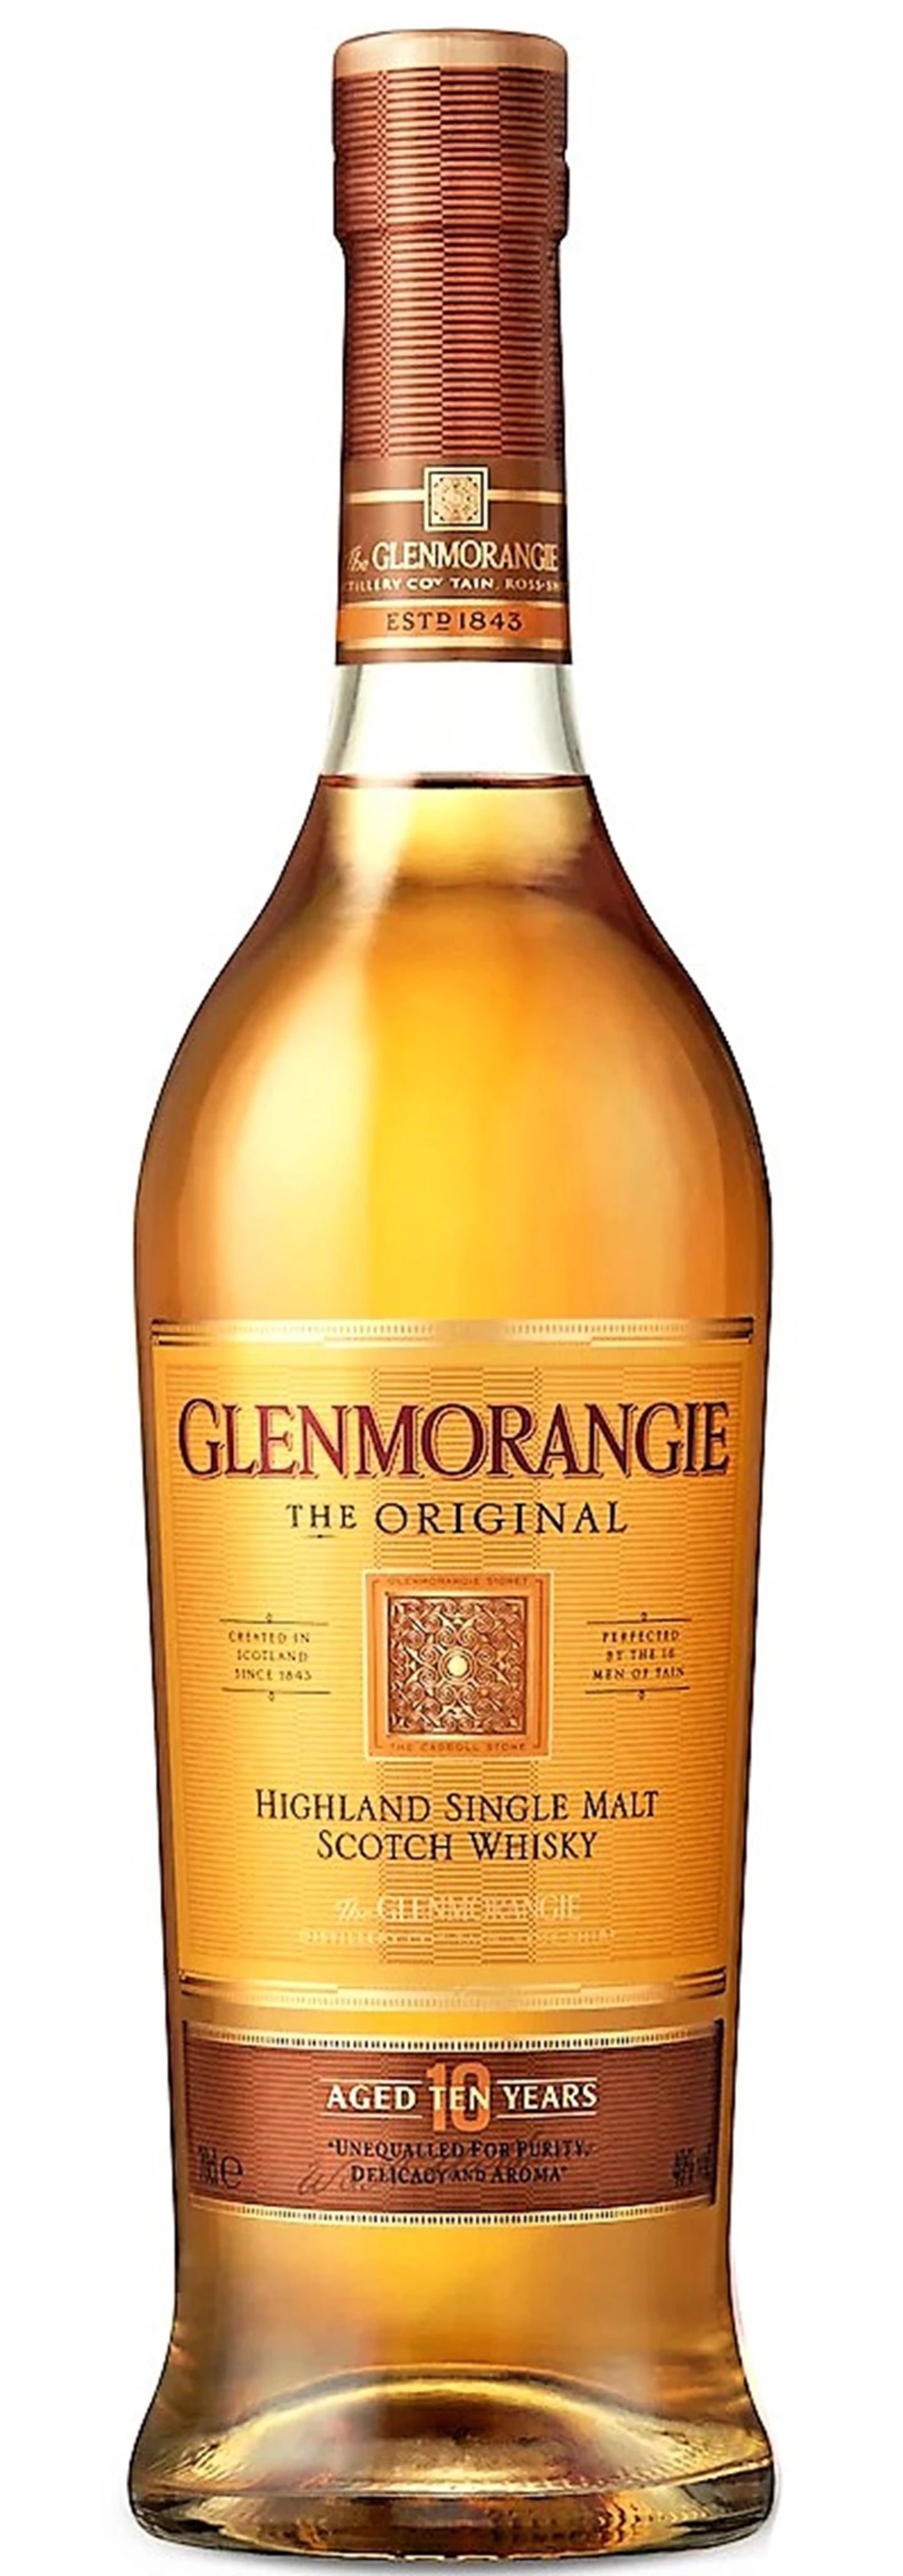 Glenmorangie_Original-Highland-single-malt